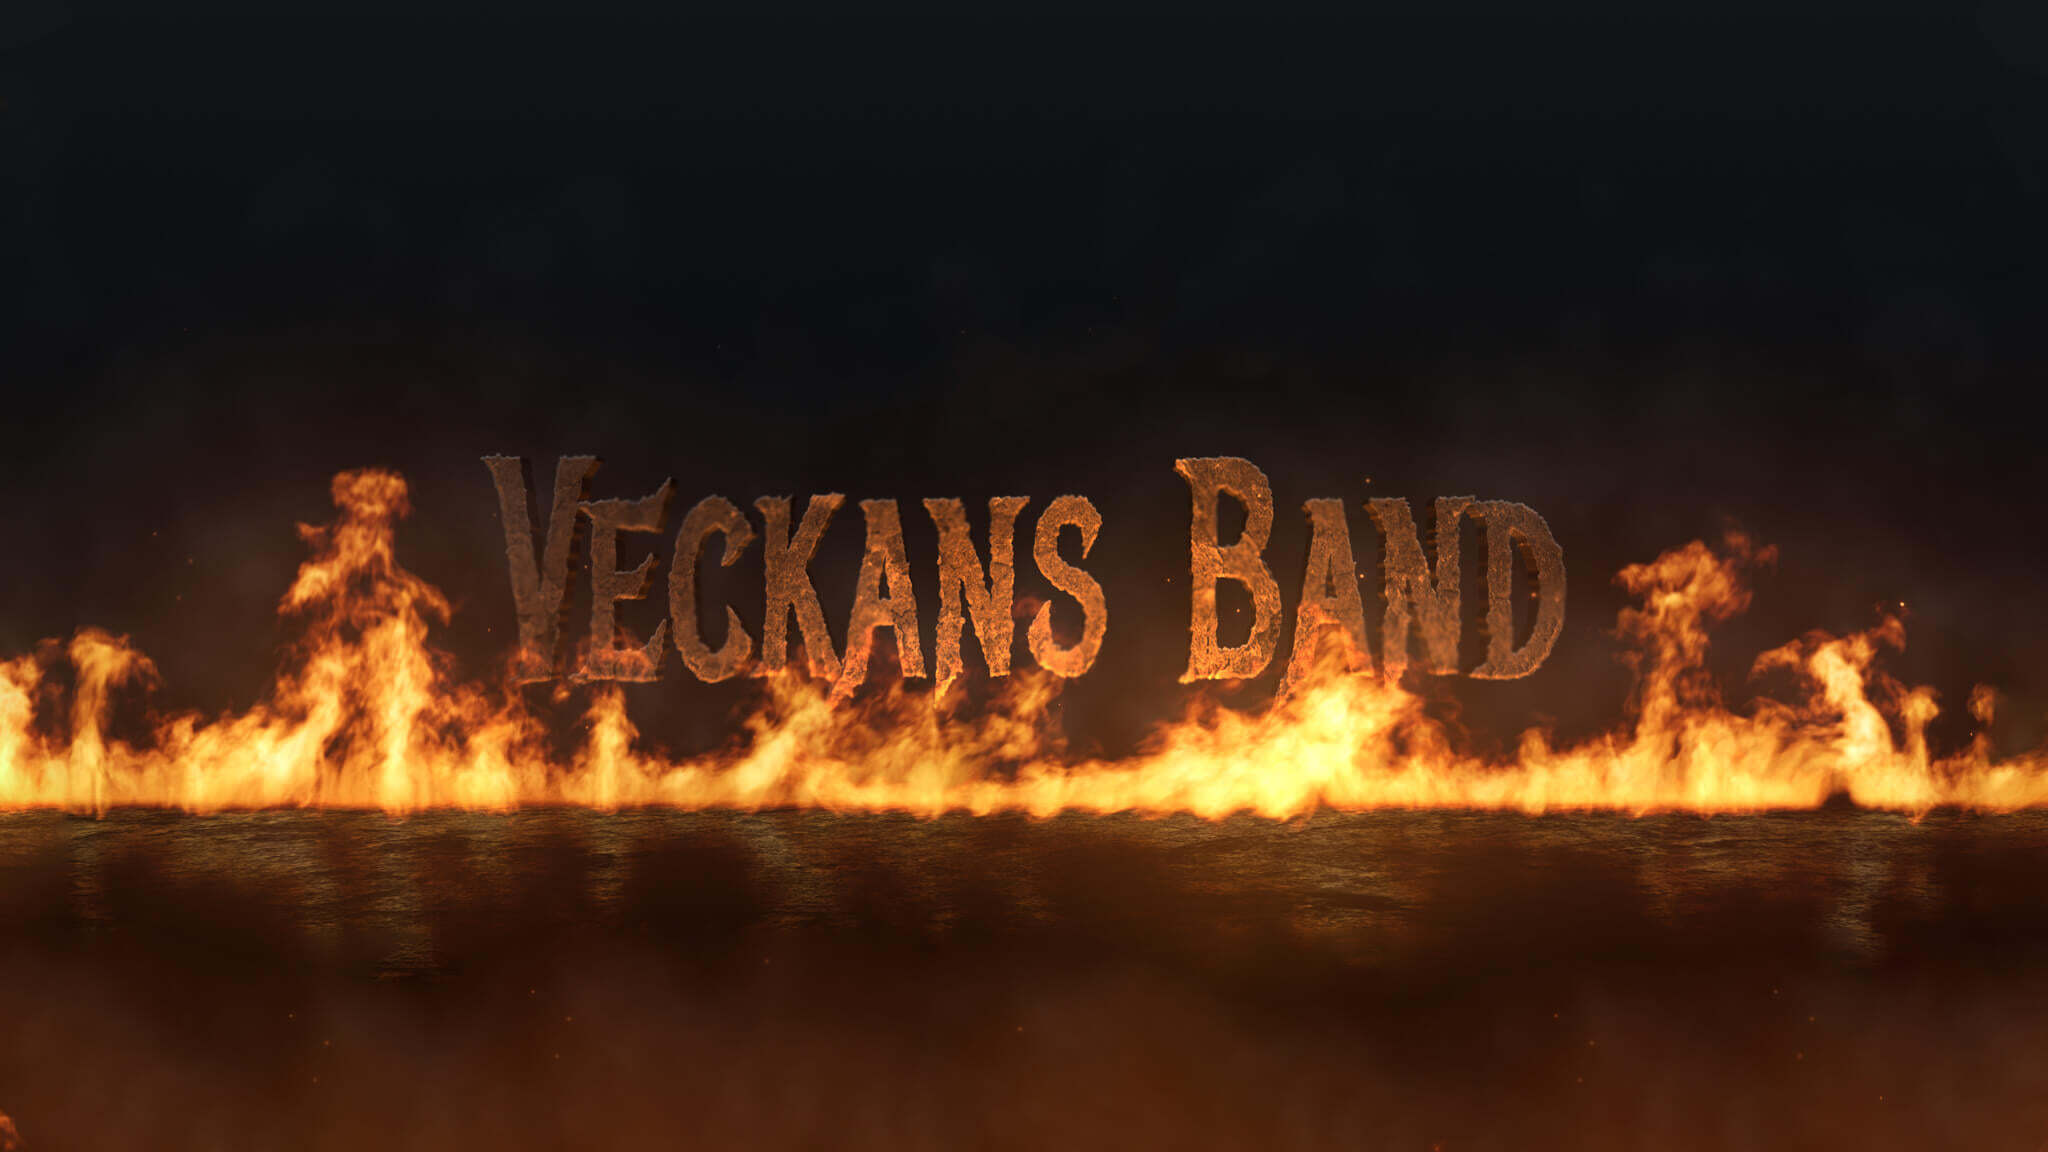 Veckans Band cover image